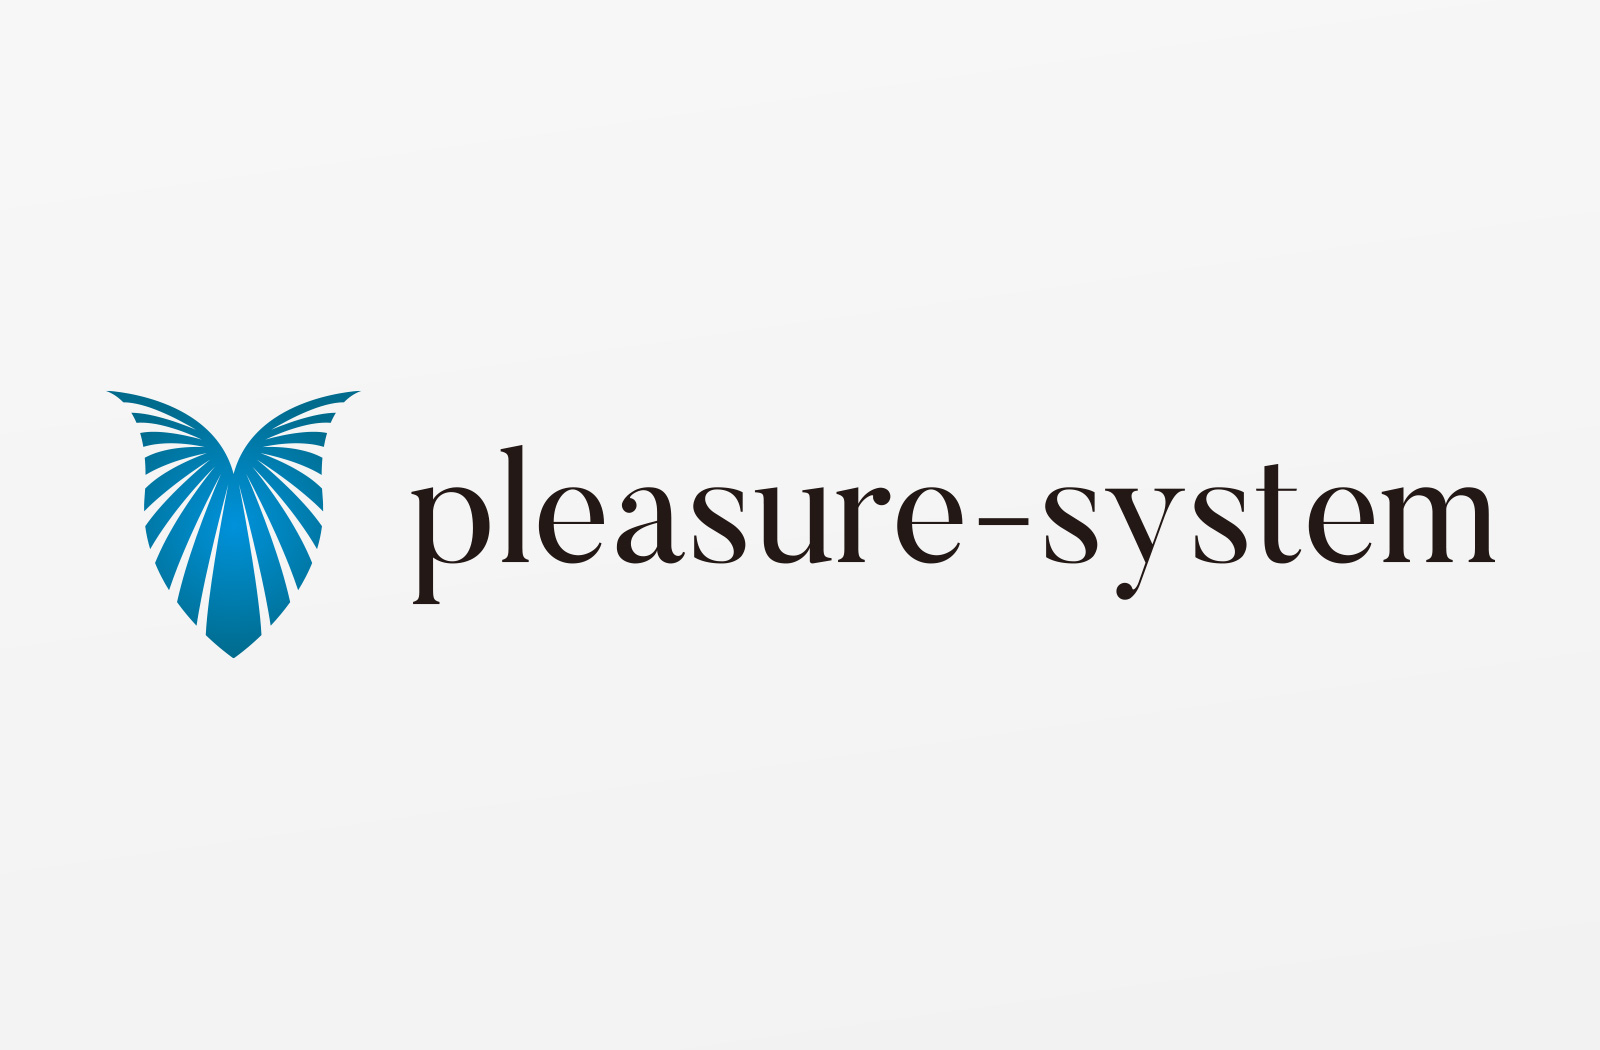 pleasure-system　ロゴ